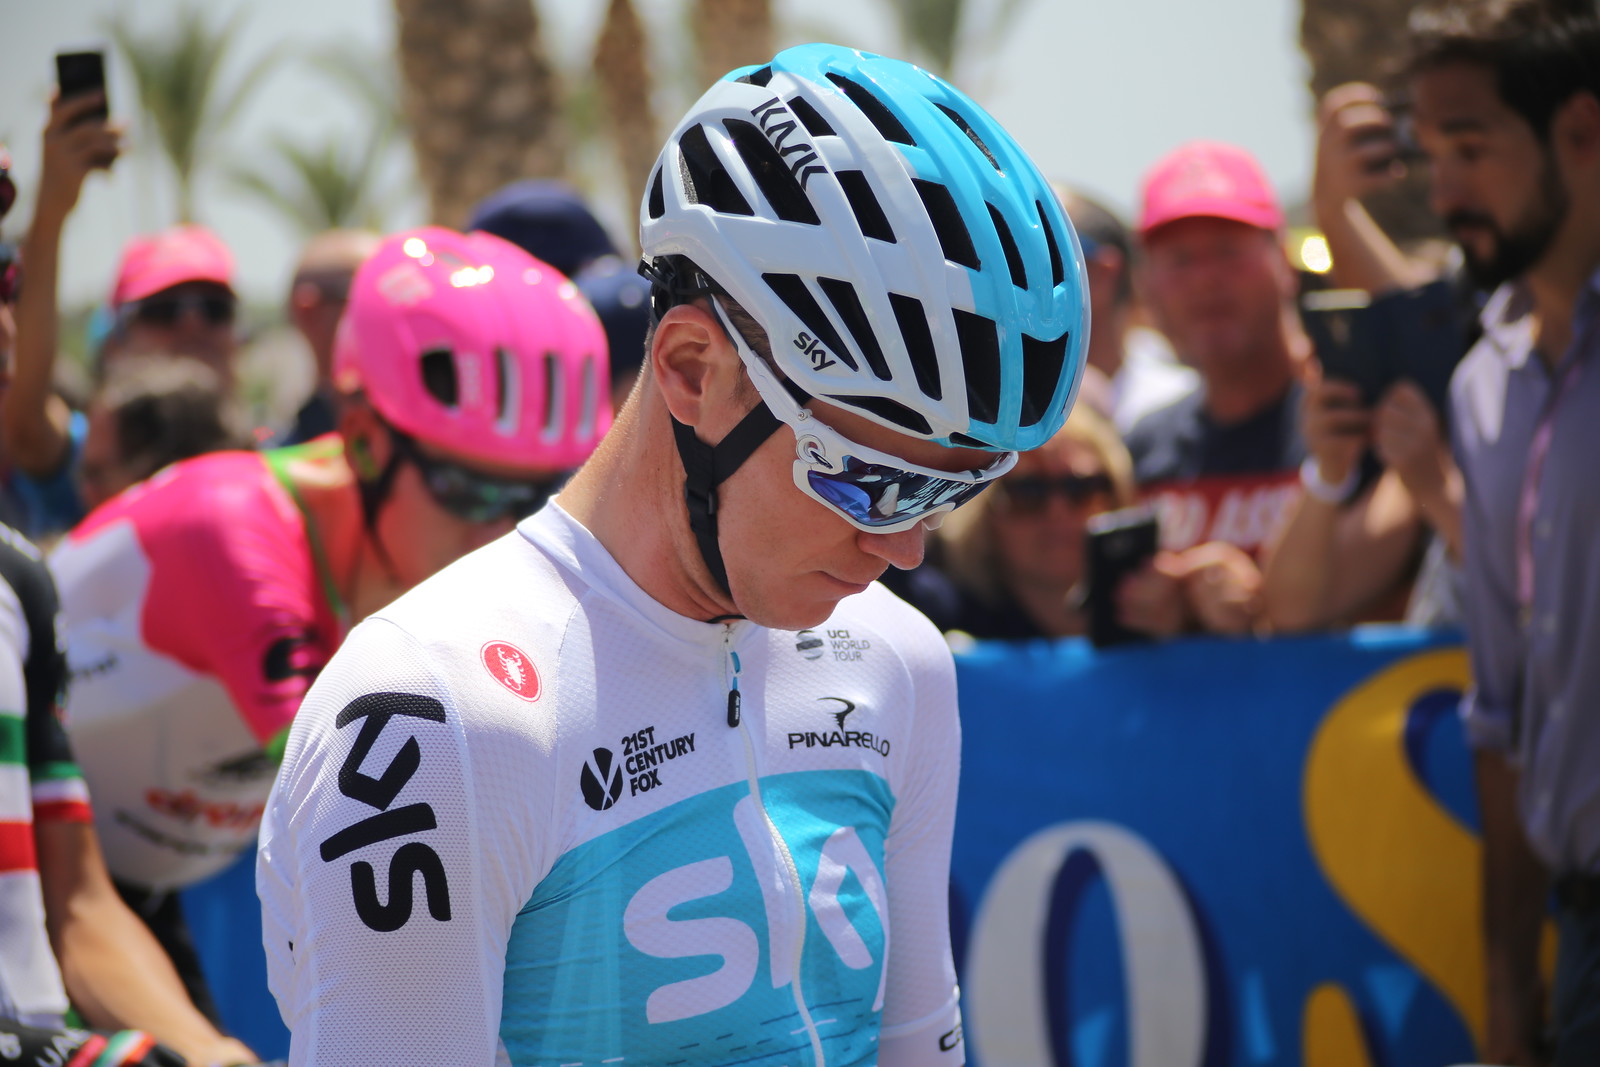 Chris Froome at Giro d'Italia